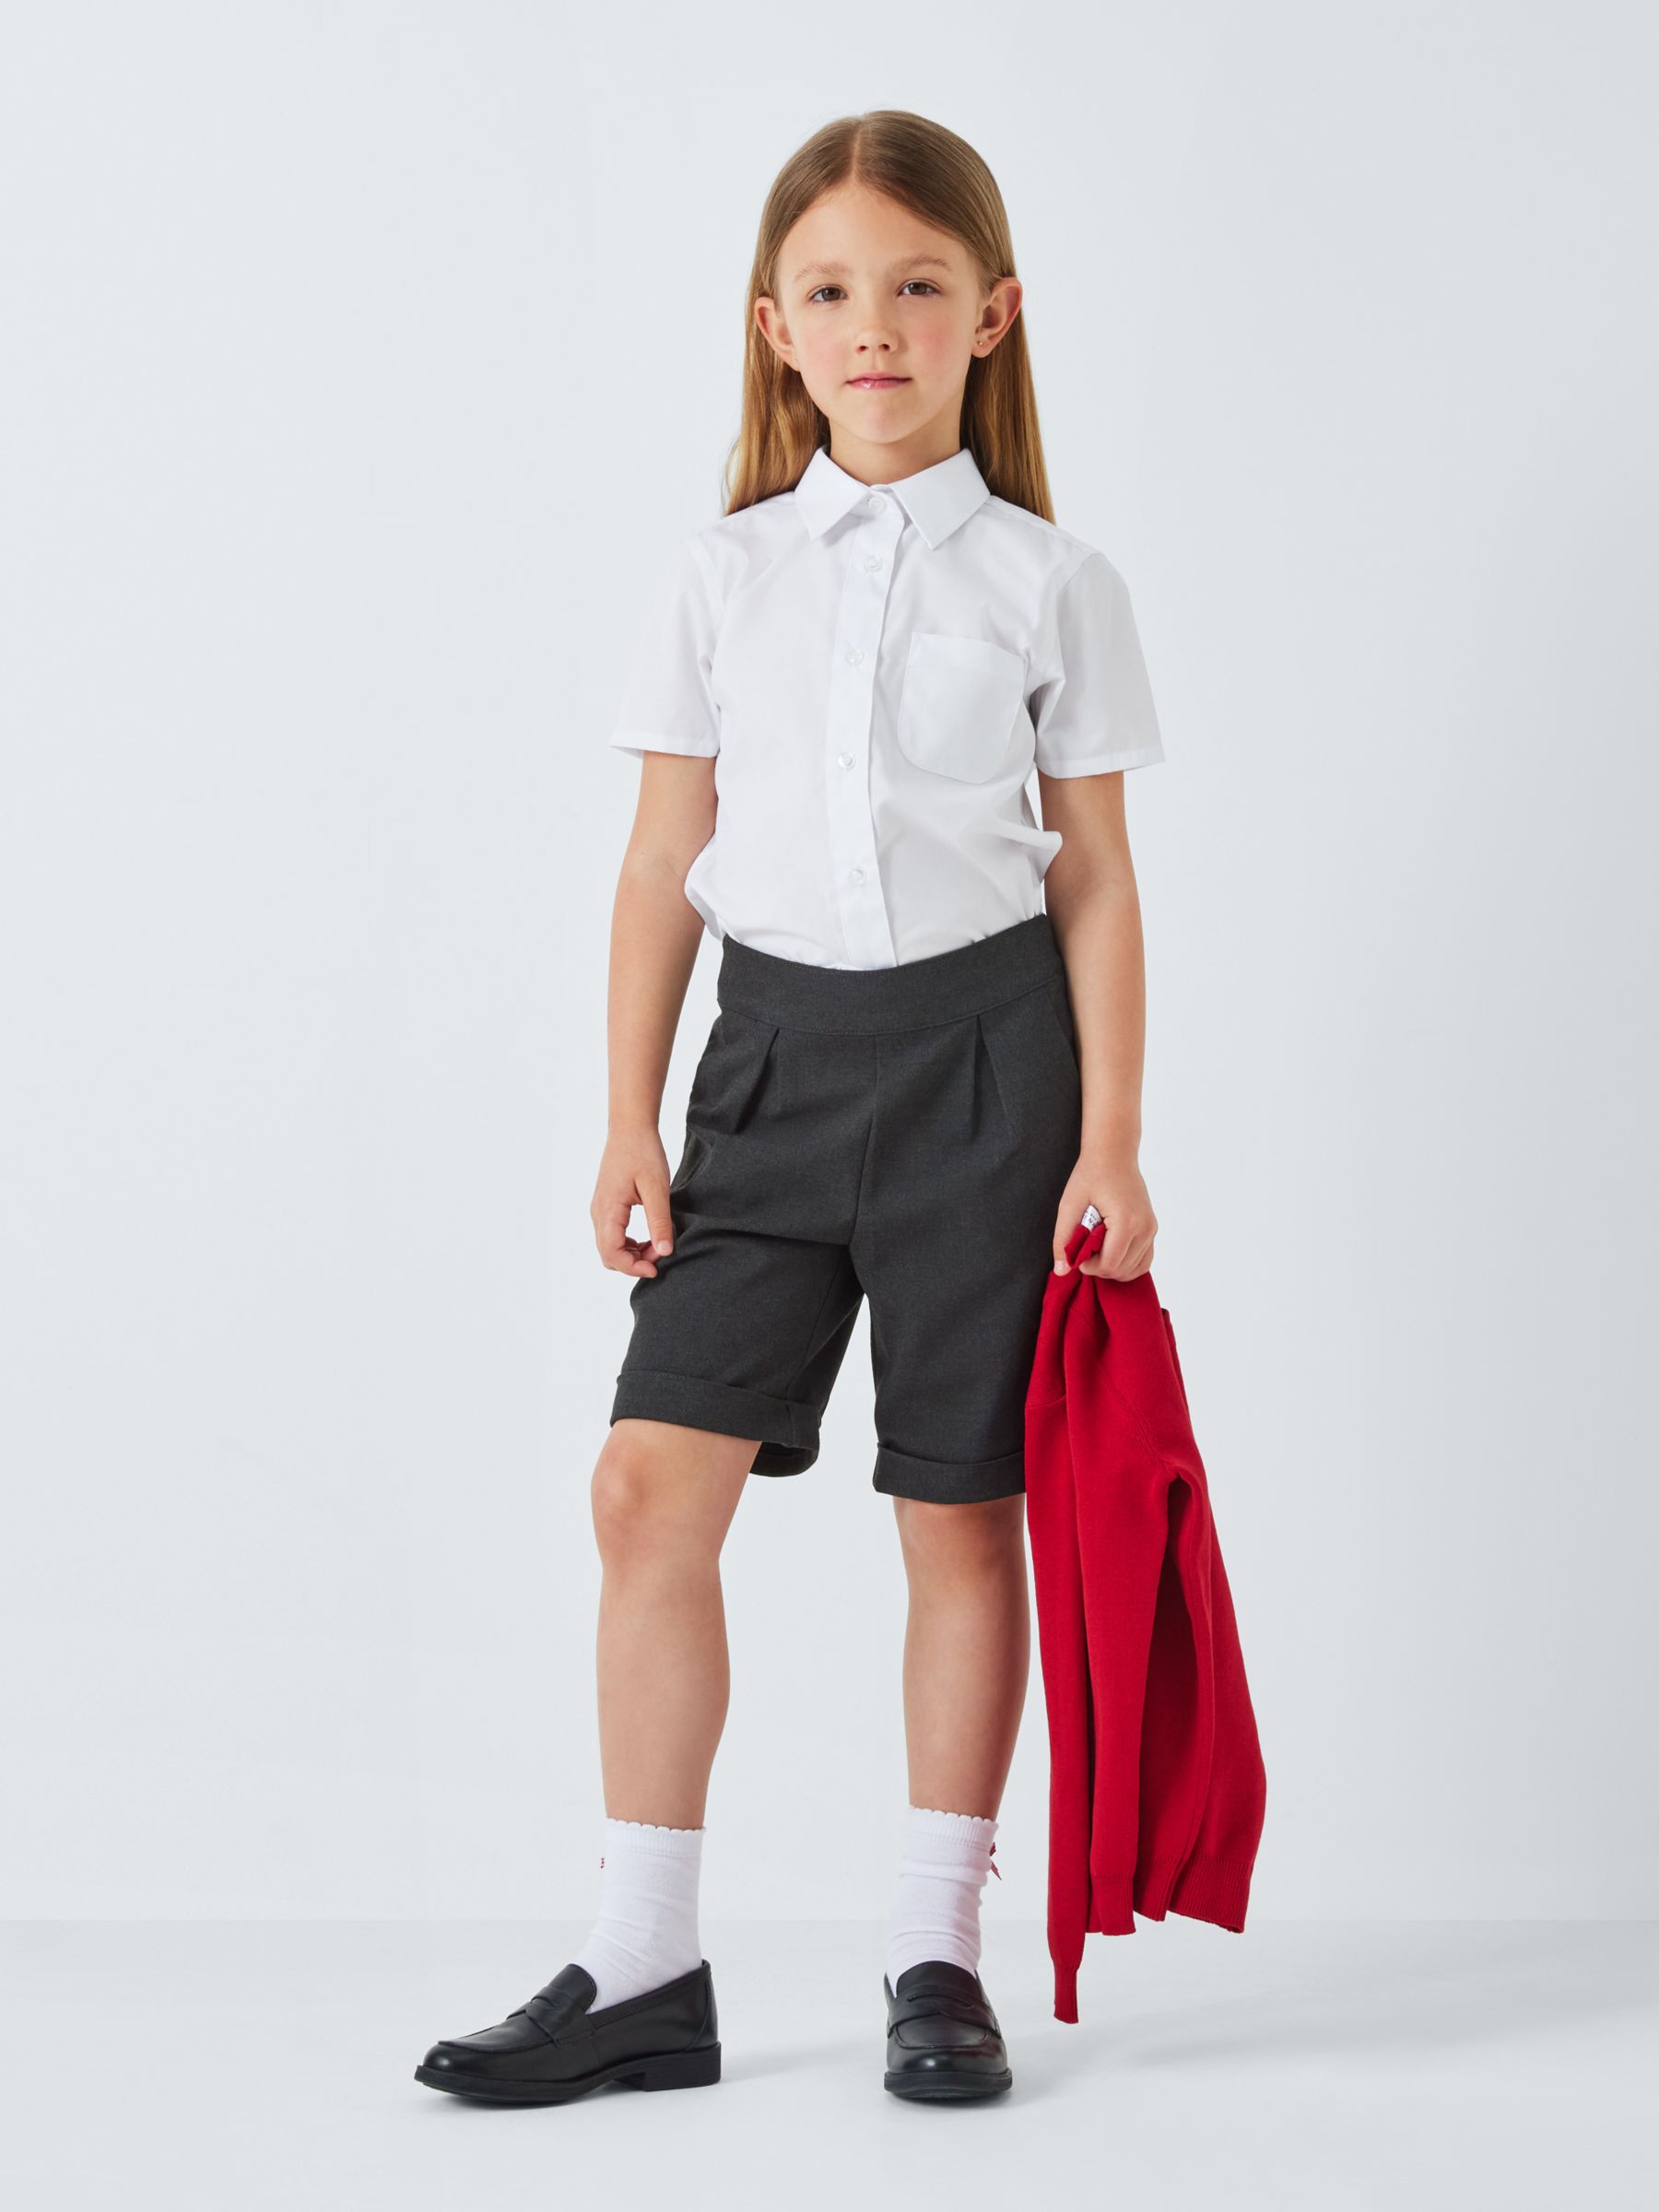 John Lewis Short Sleeve School Blouse, Pack of 2, White, 4 years